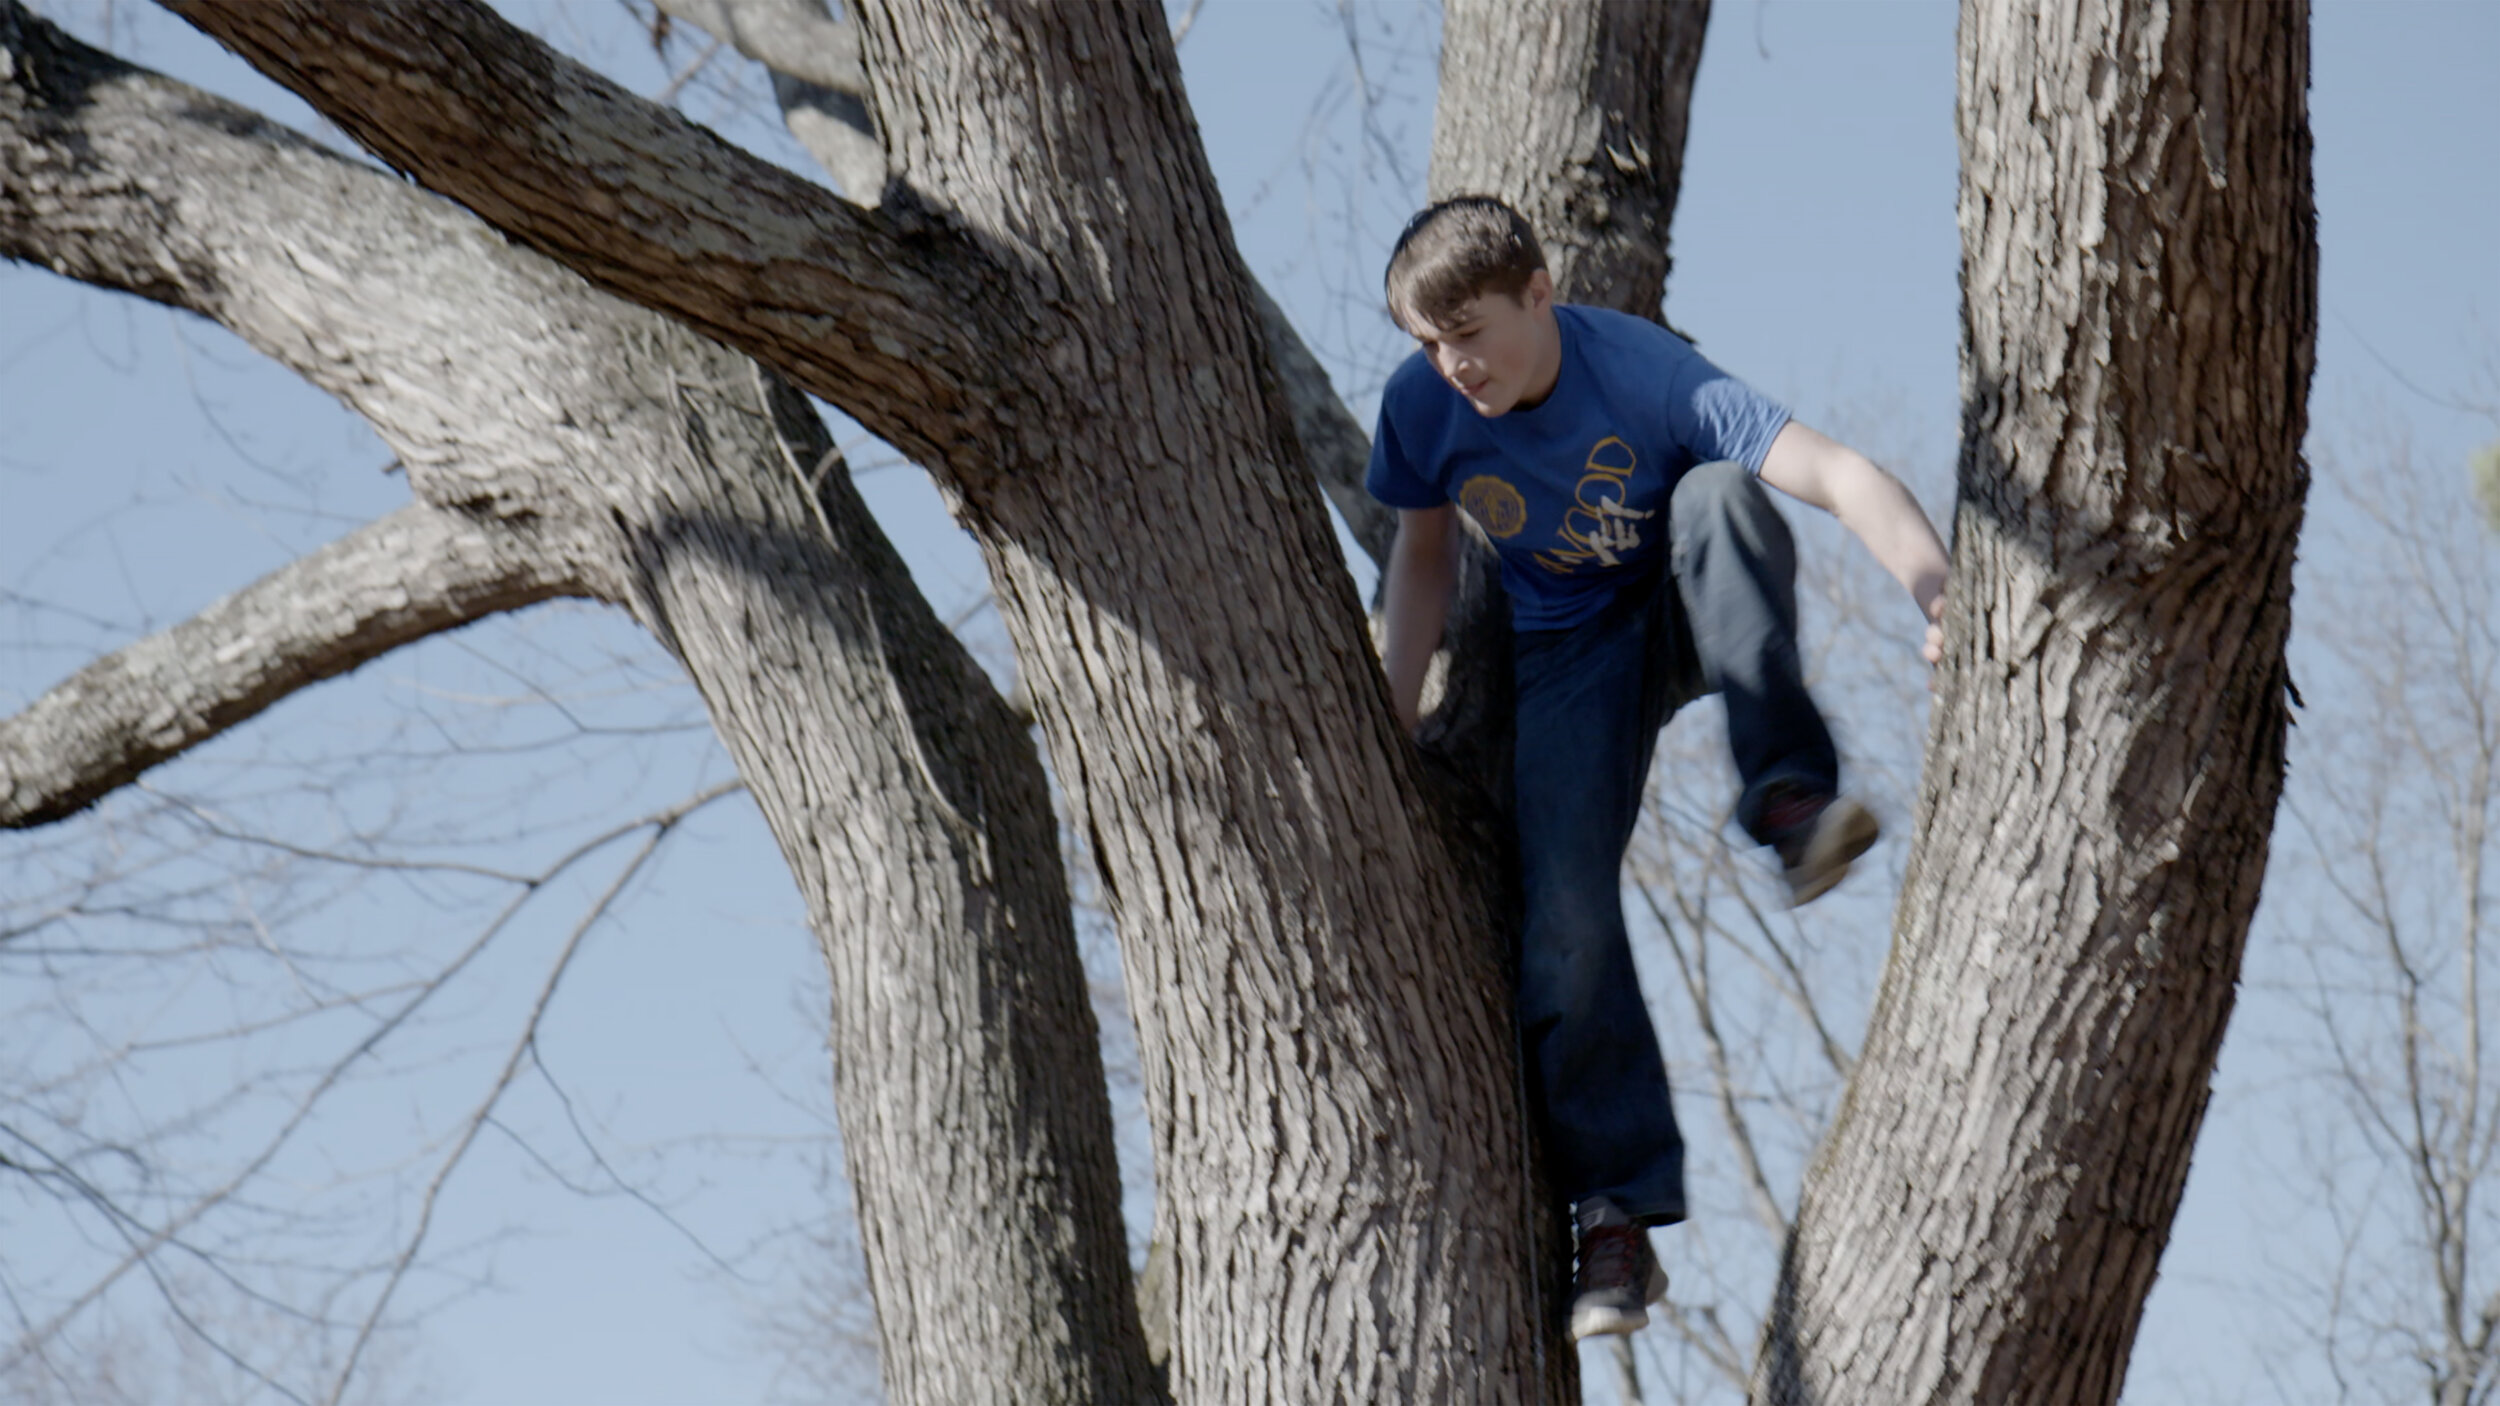 16_WRESTLE_Teague Berres climbing a tree in his backyard.jpg